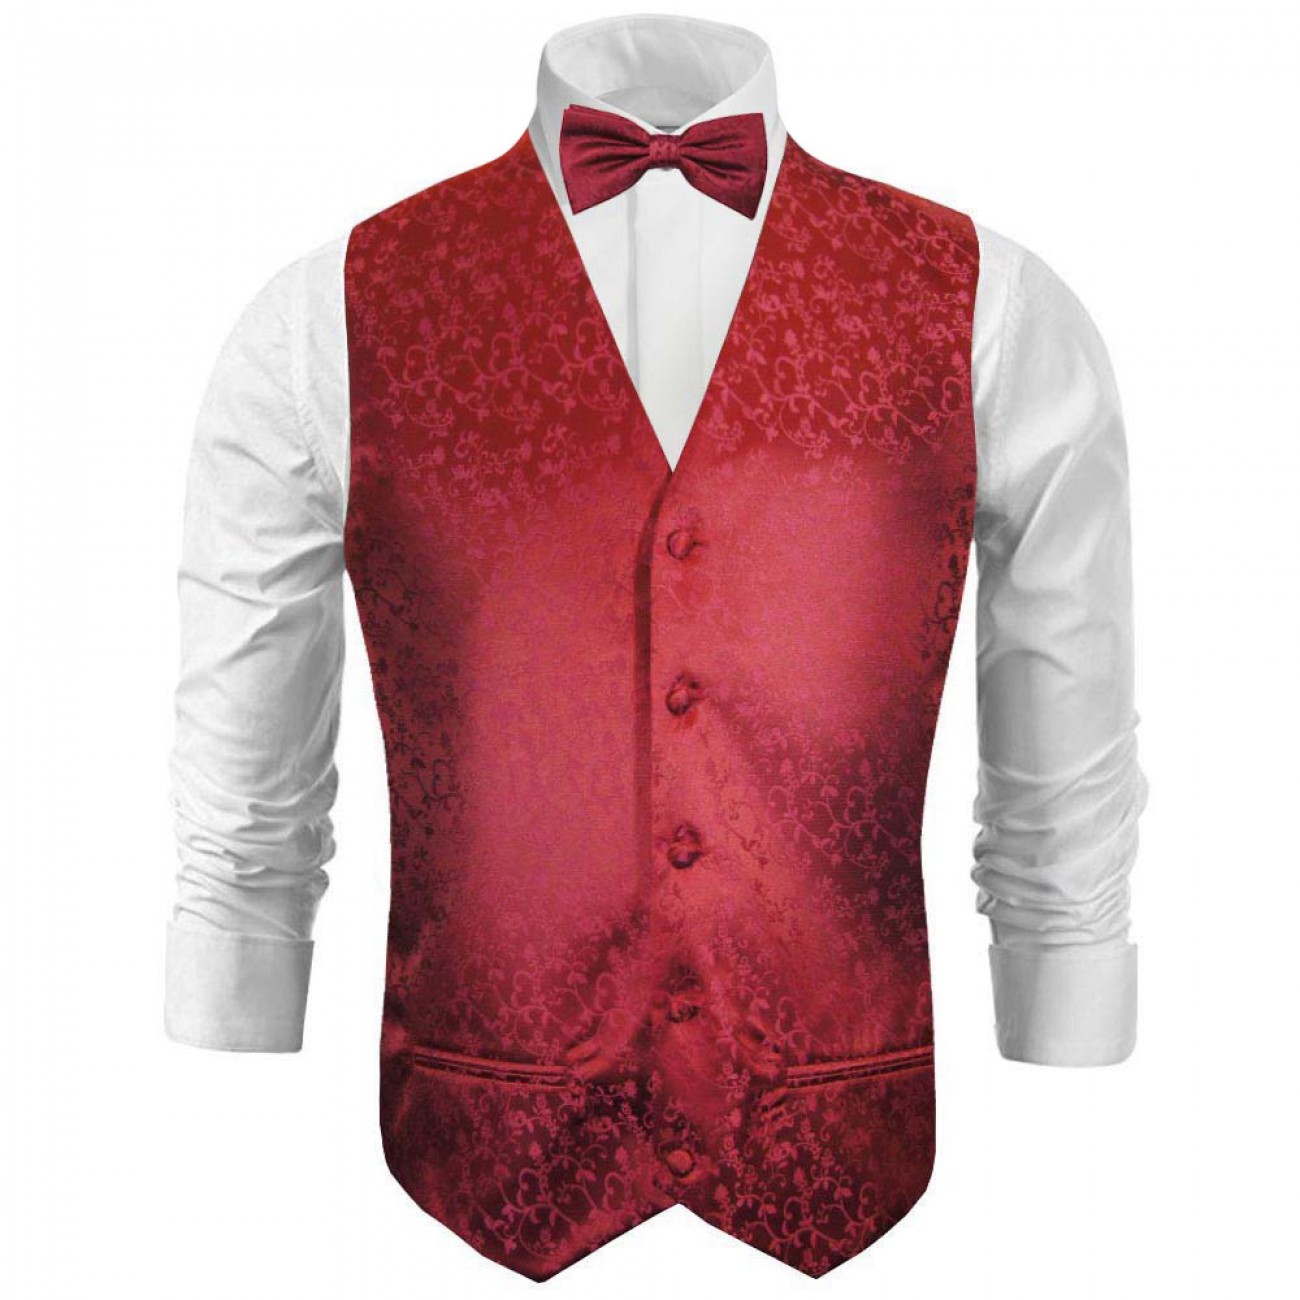 tuxedo vest burgundy red maroon wedding waistcoat and bow tie